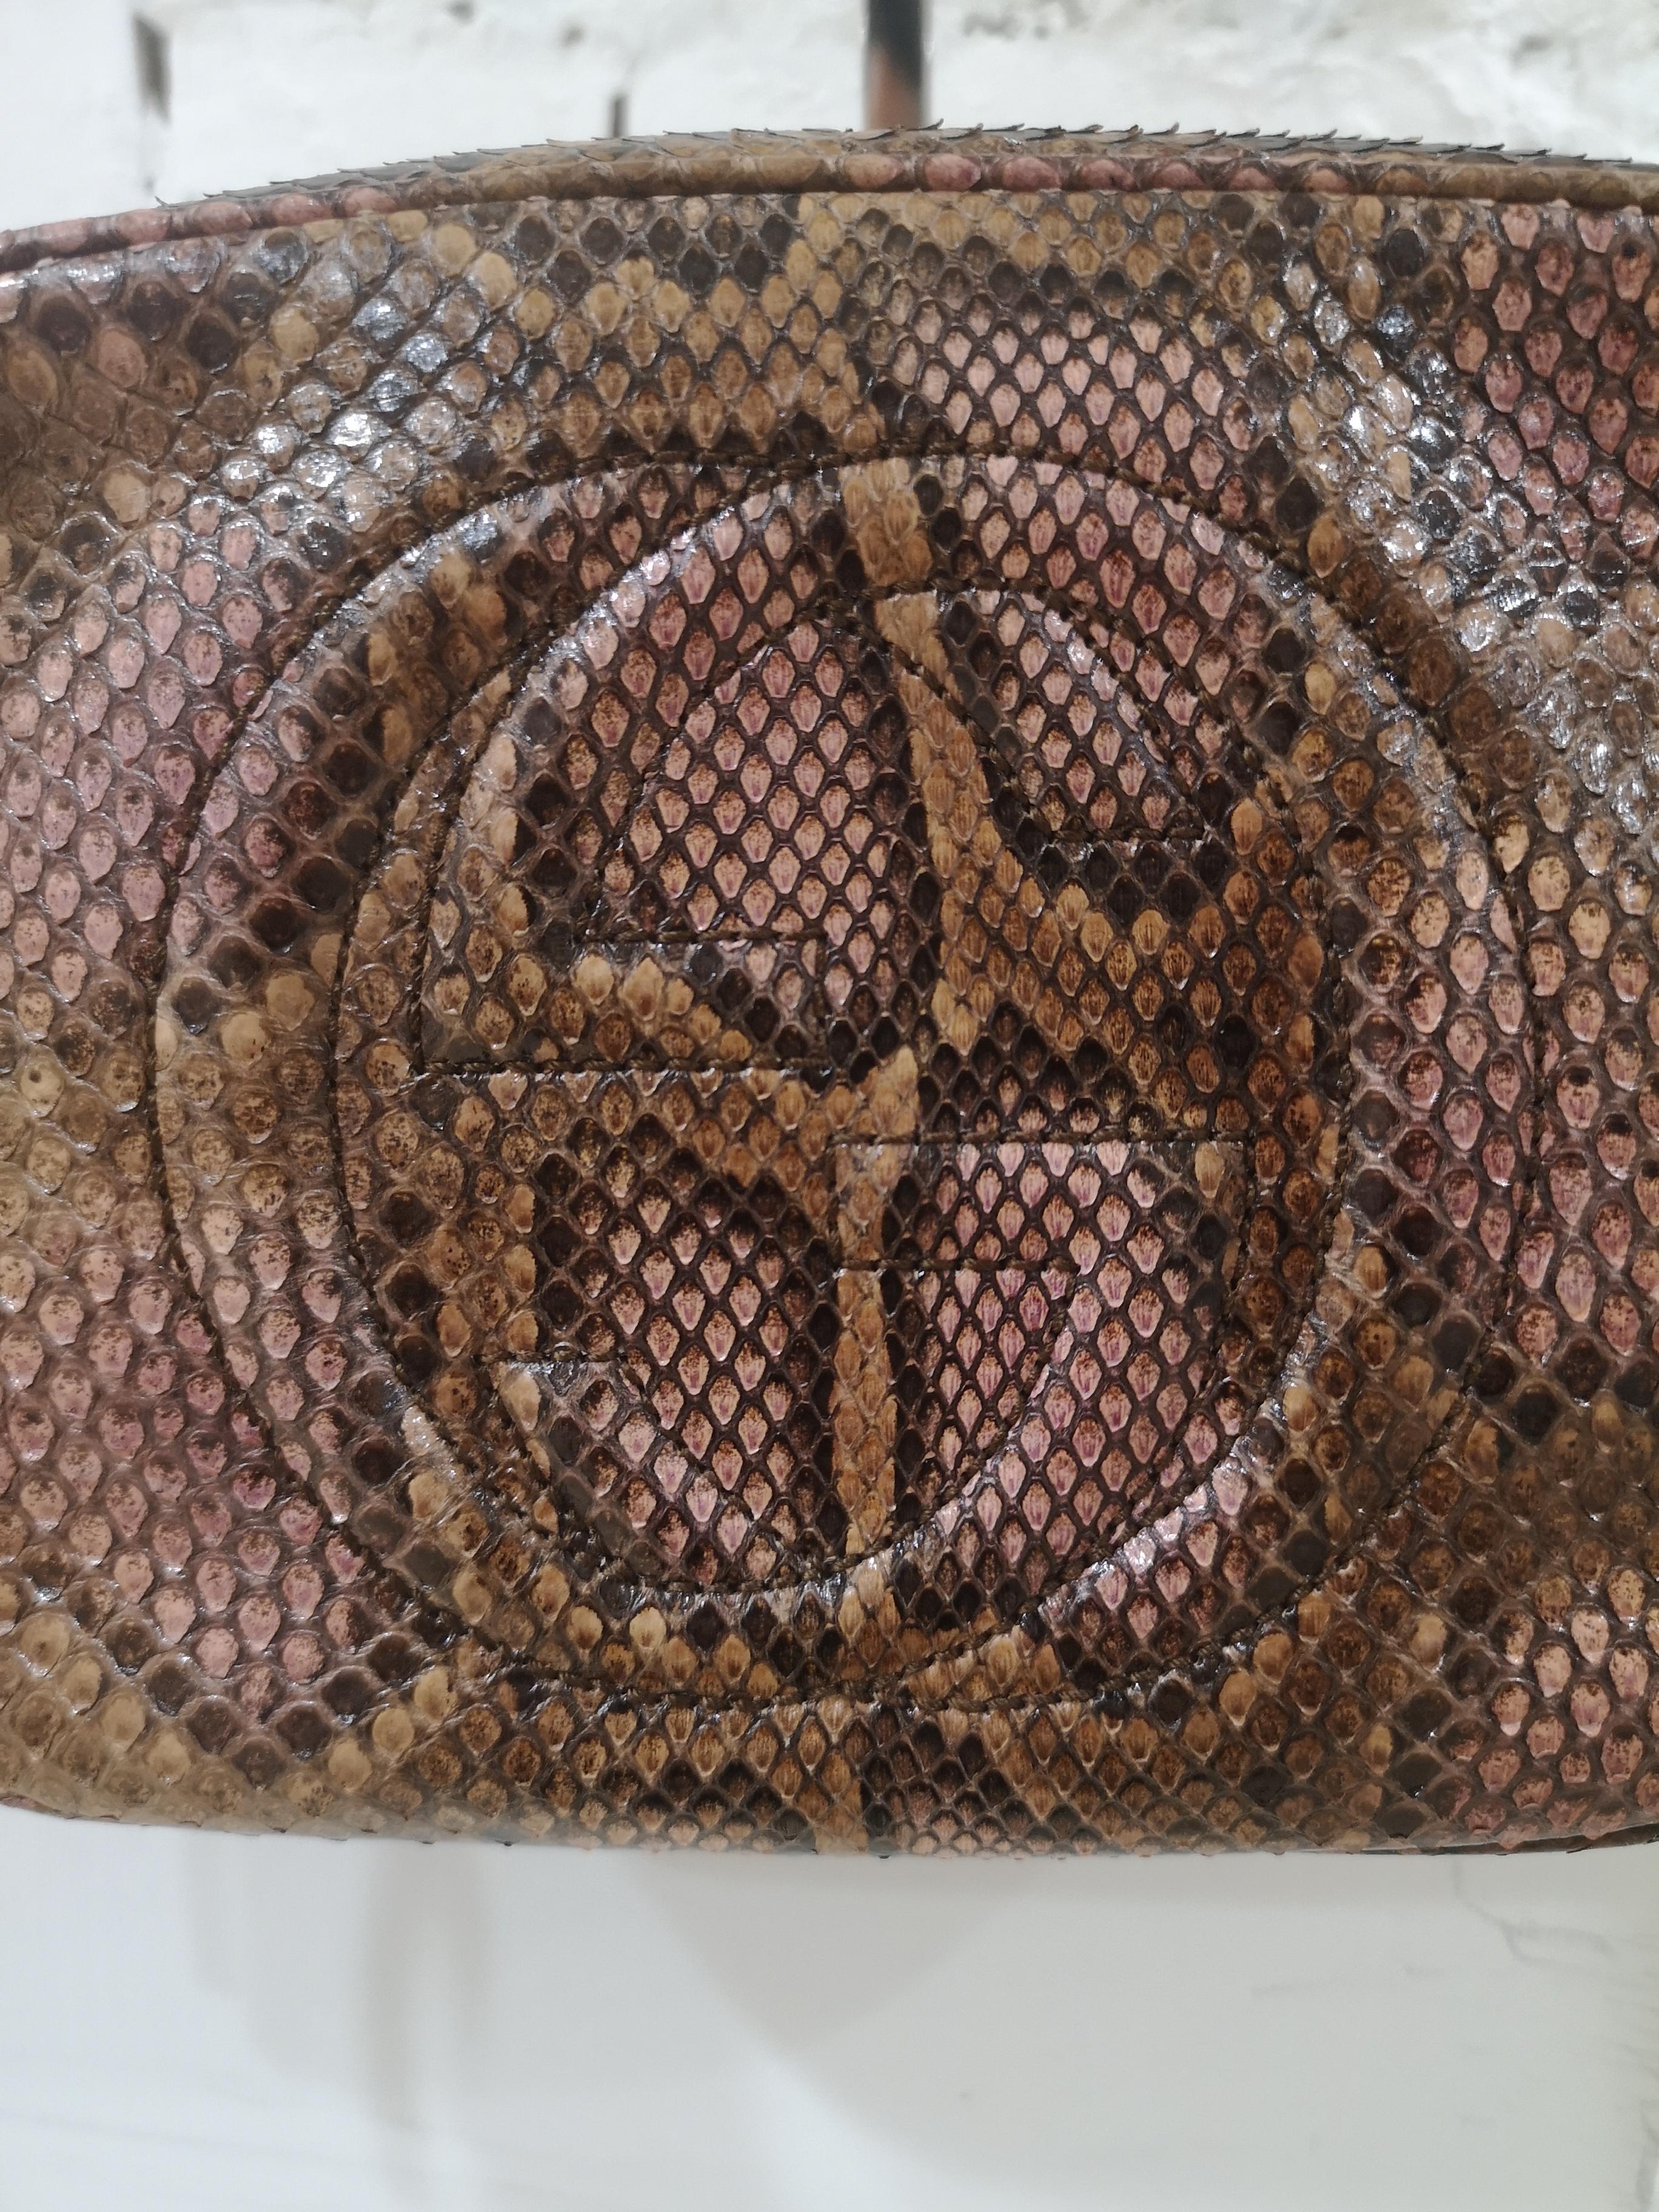 Gucci Soho python shoulder bag
Measurements: 15 * 20 cm
depth 8 cm